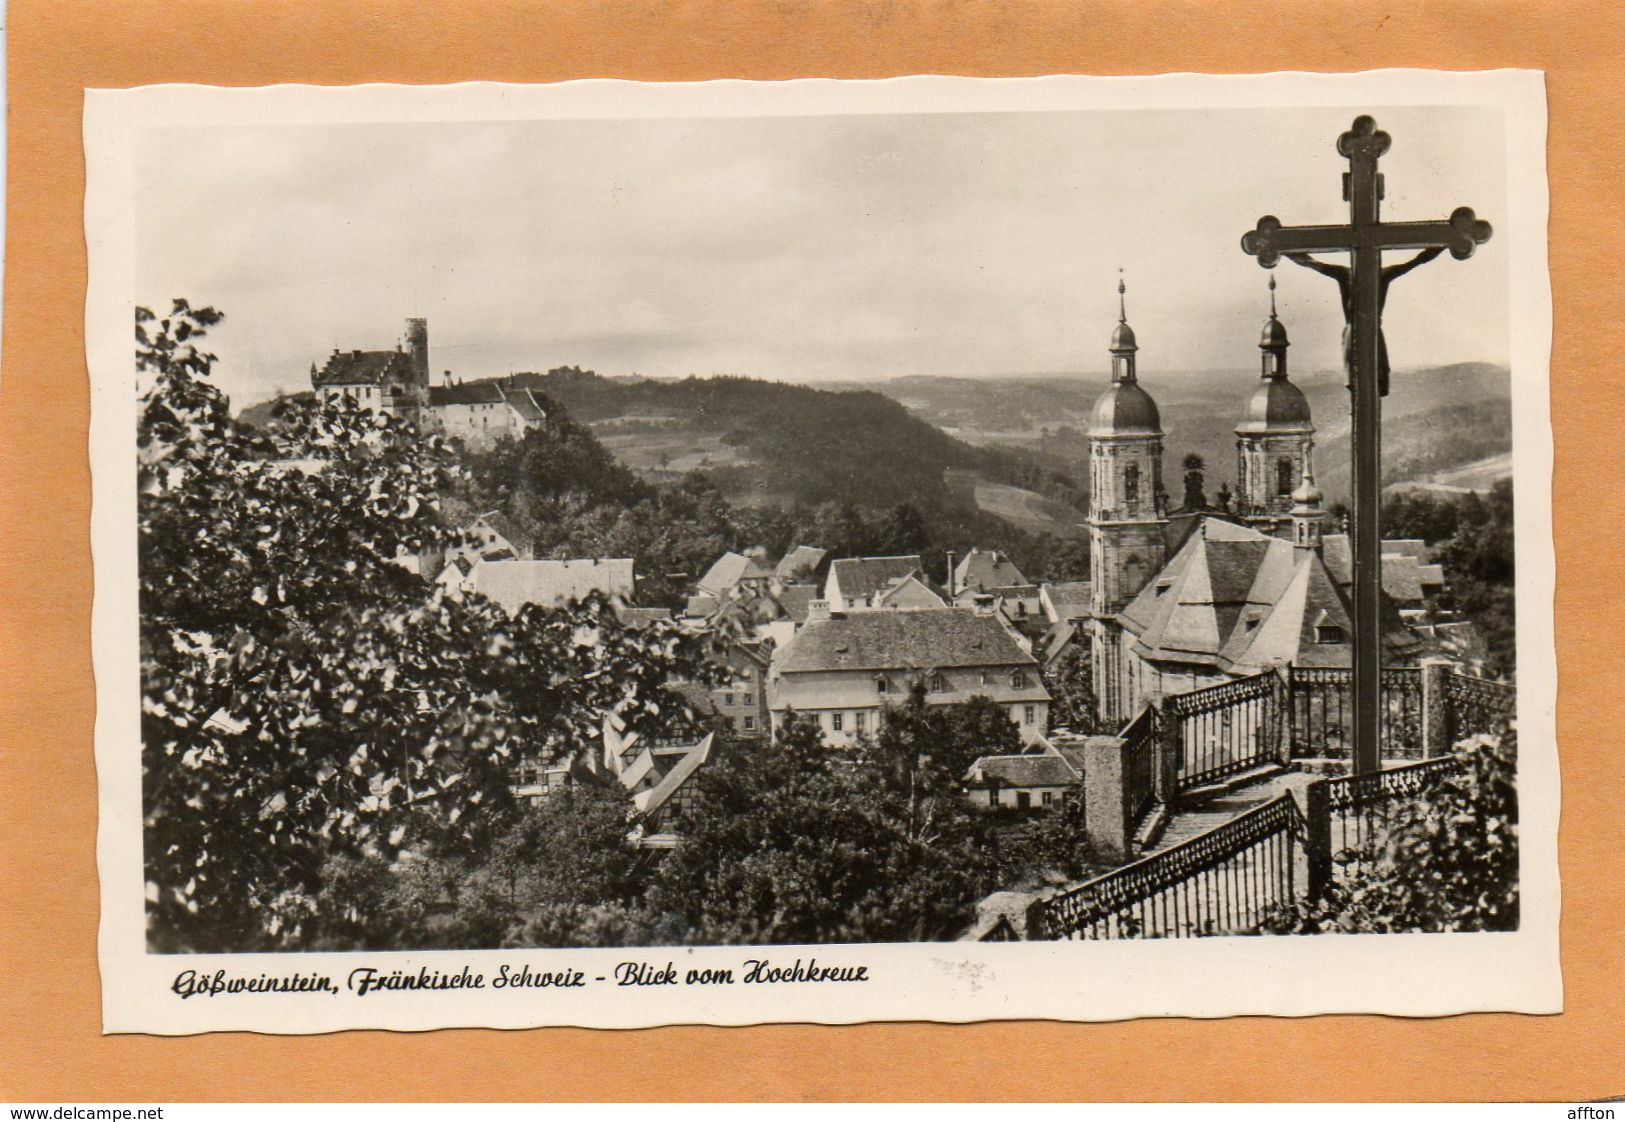 Gossweinstein Germany 1940 Postcard - Forchheim